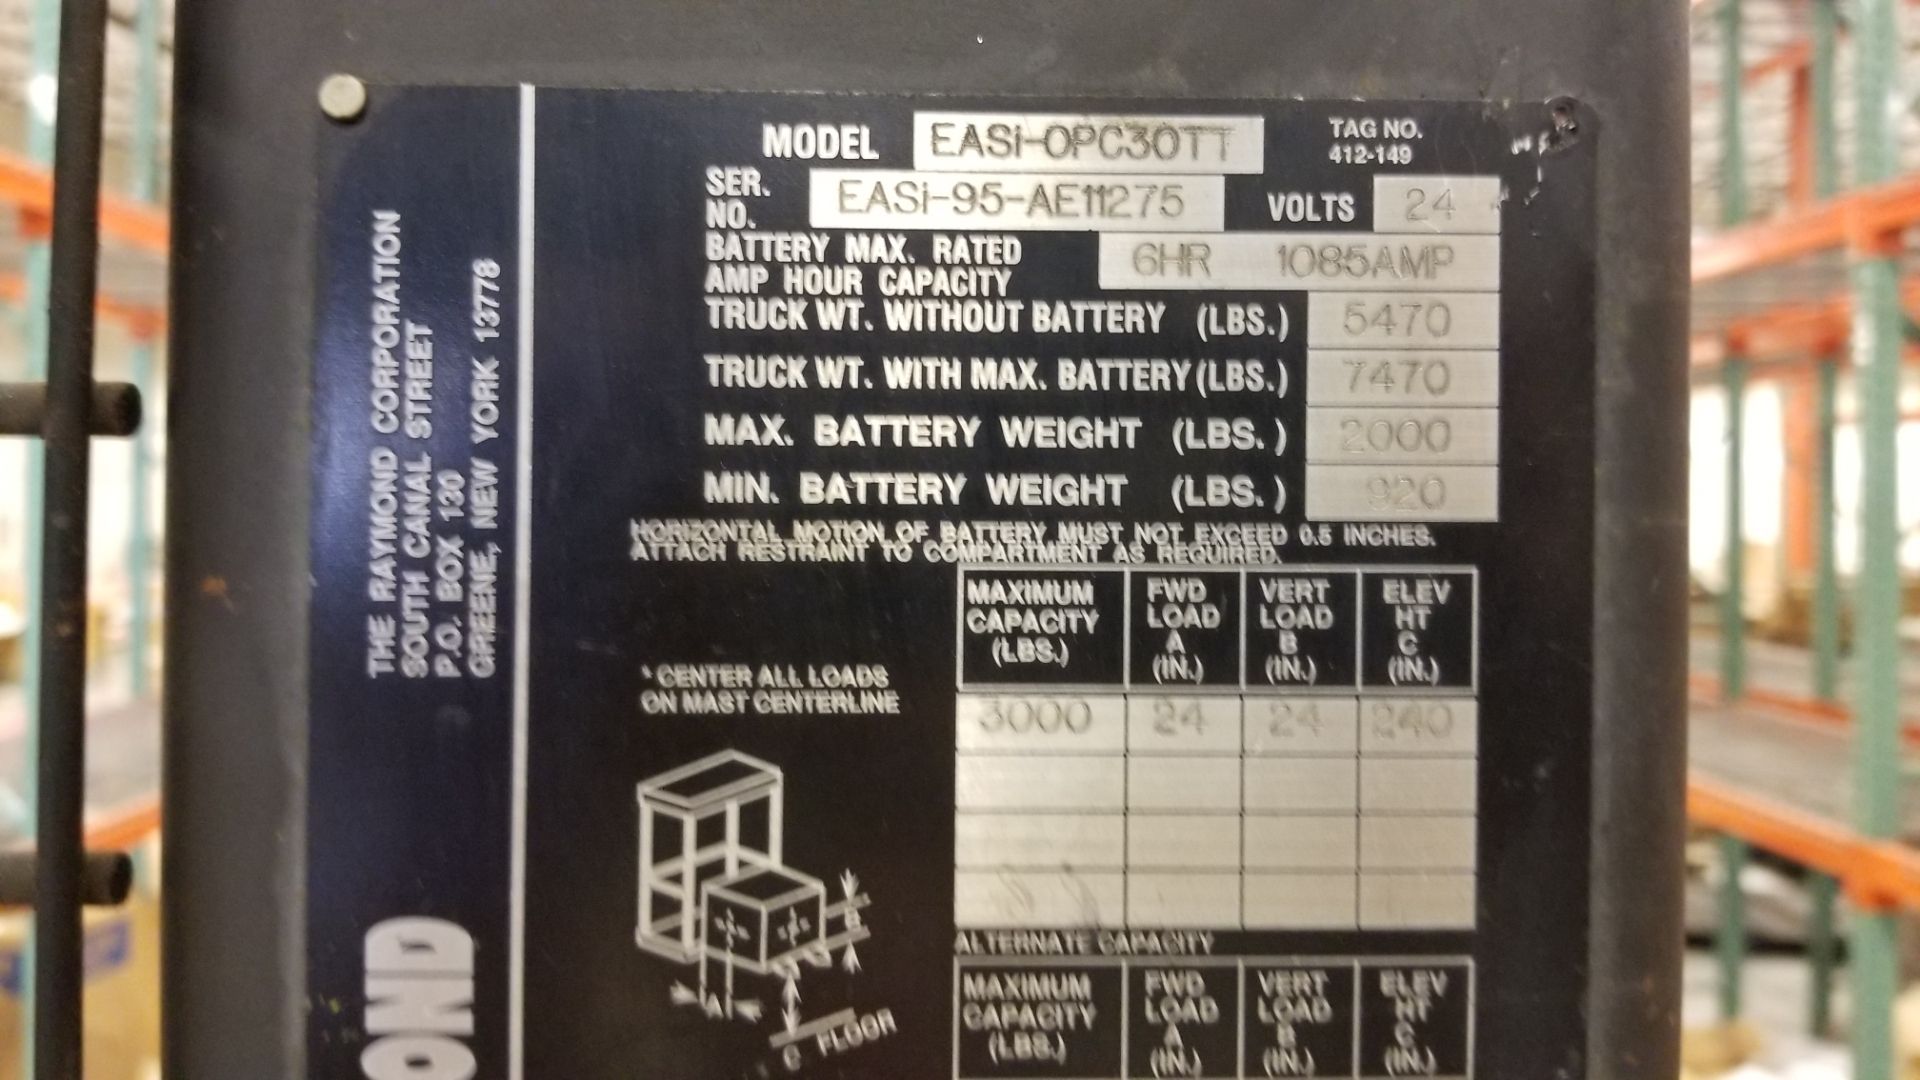 Raymond EASi-OPC30TT 3,000 lbs. Capacity Order Picker - Image 3 of 3